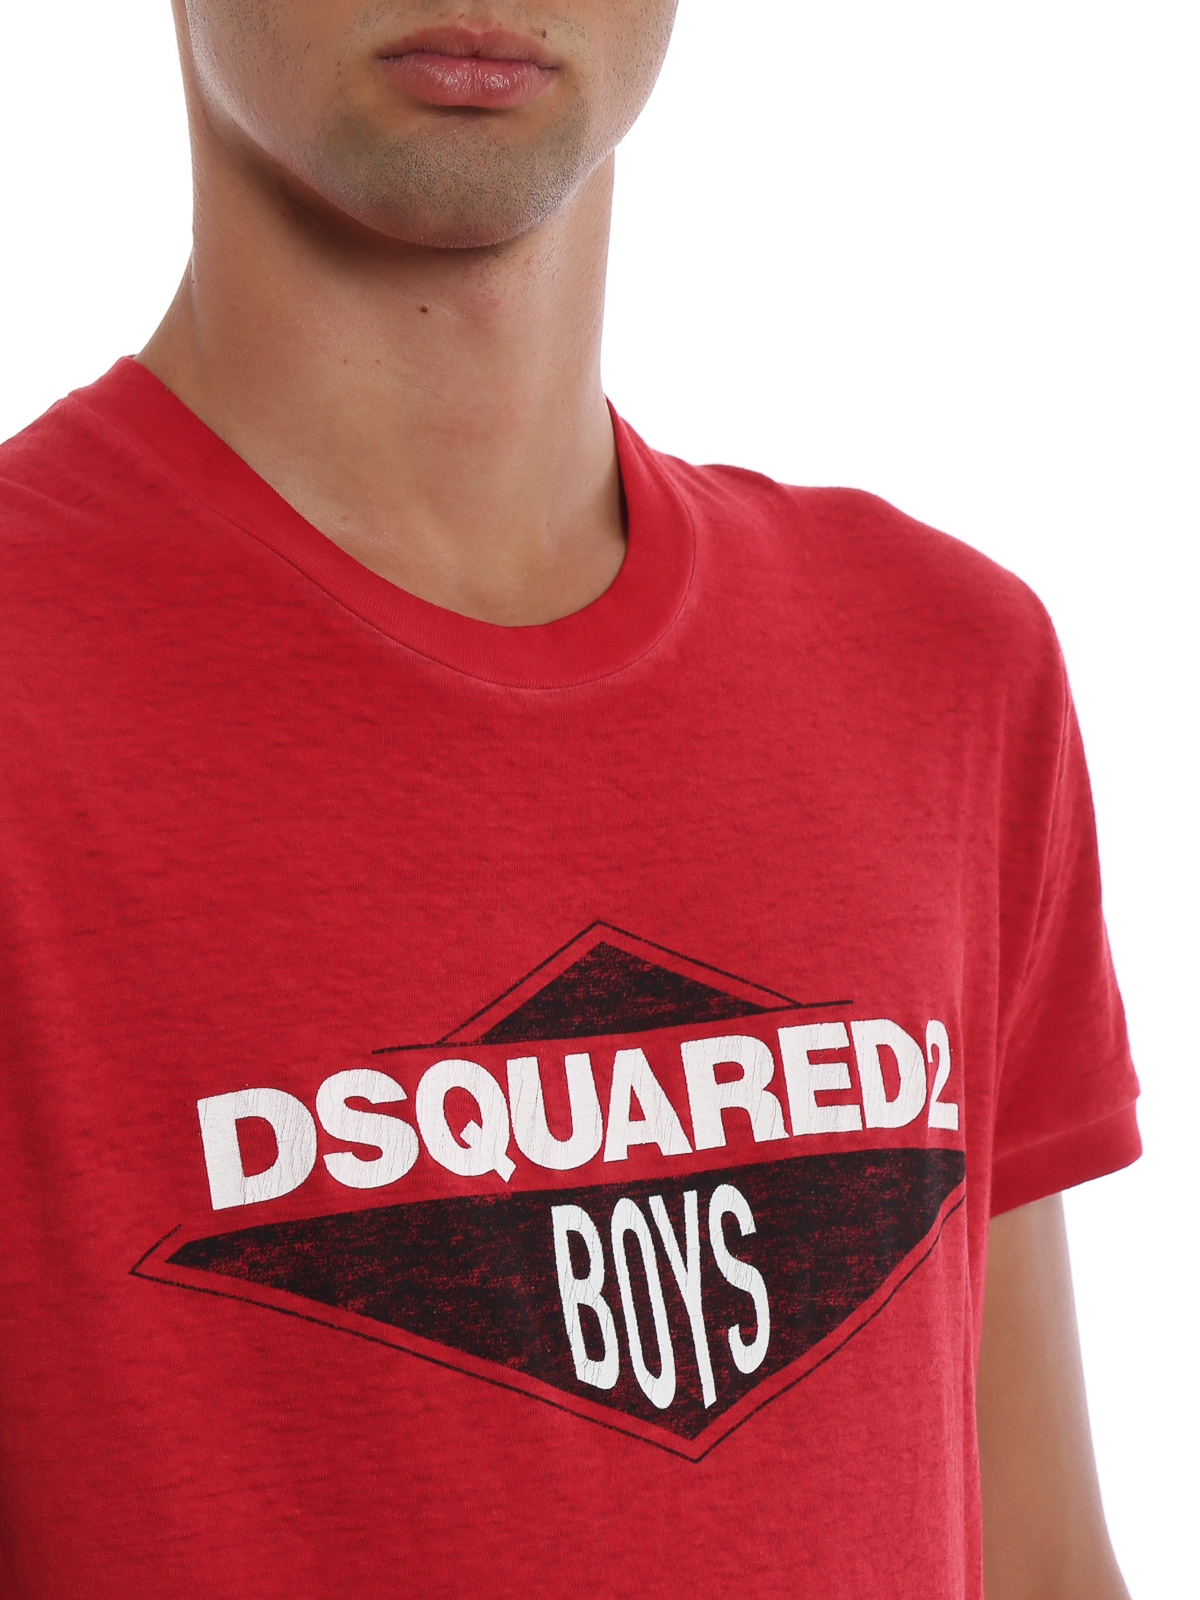 dsquared t shirt boys